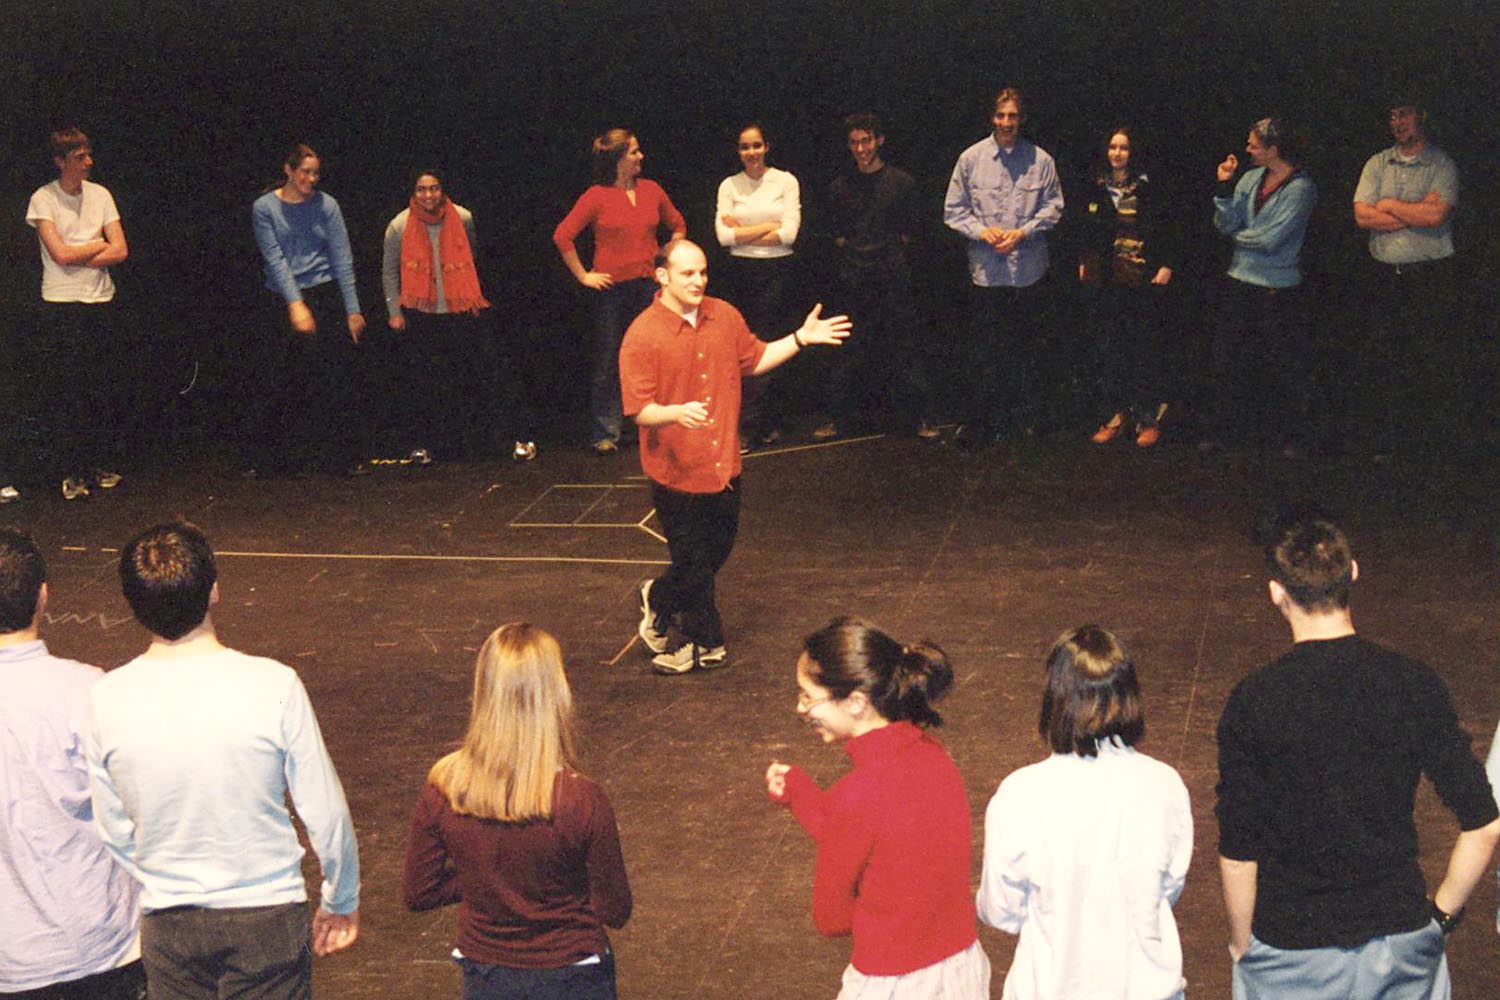 Teaching at Interlochen, The Acting Company